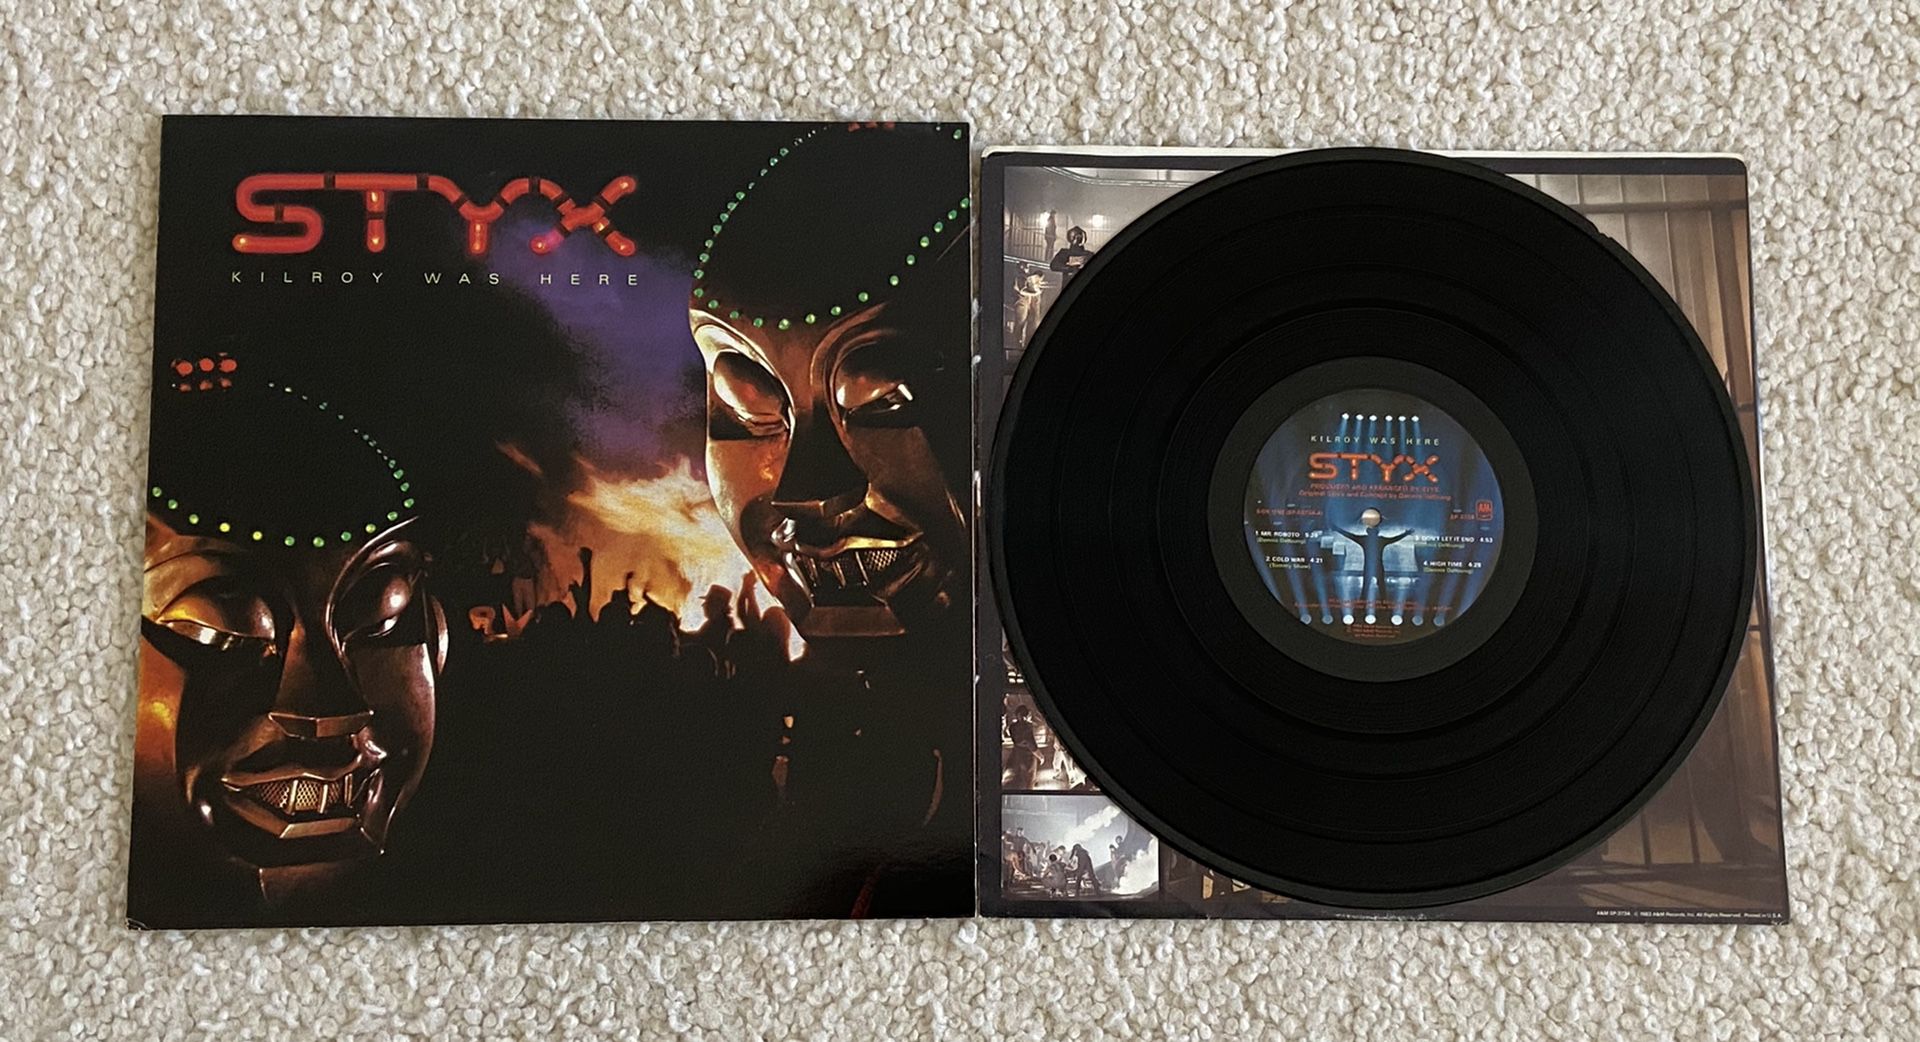 Styx “Kilroy Was Here” vinyl lp 1983 A&M Records Original 1st Monarch Pressing not a reissue beautiful like new pristine vinyl 80s Prog Rock